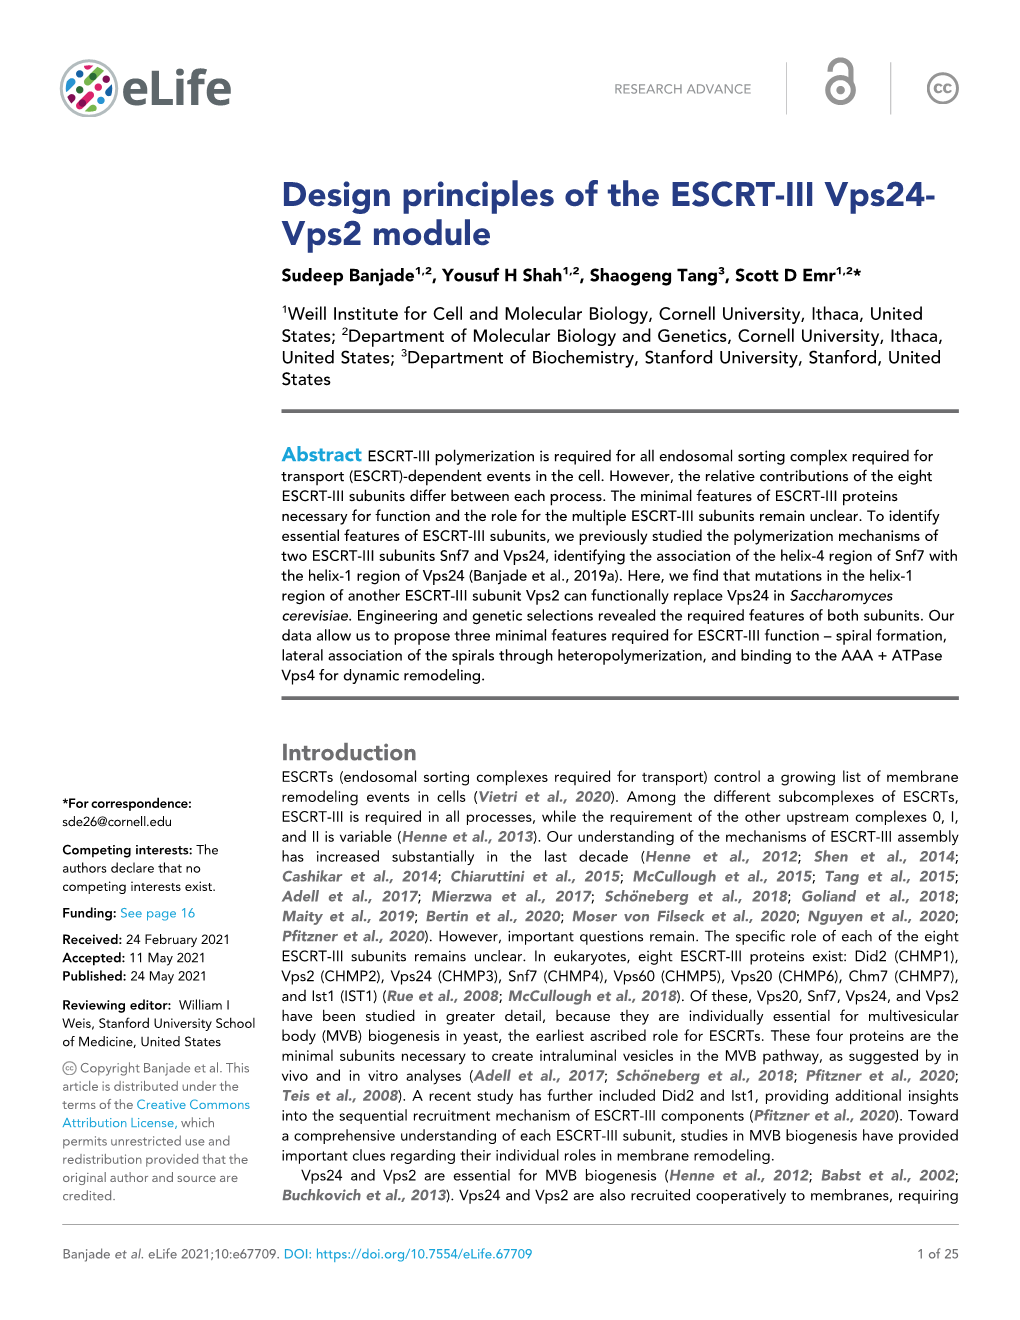 Design Principles of the ESCRT-III Vps24- Vps2 Module Sudeep Banjade1,2, Yousuf H Shah1,2, Shaogeng Tang3, Scott D Emr1,2*